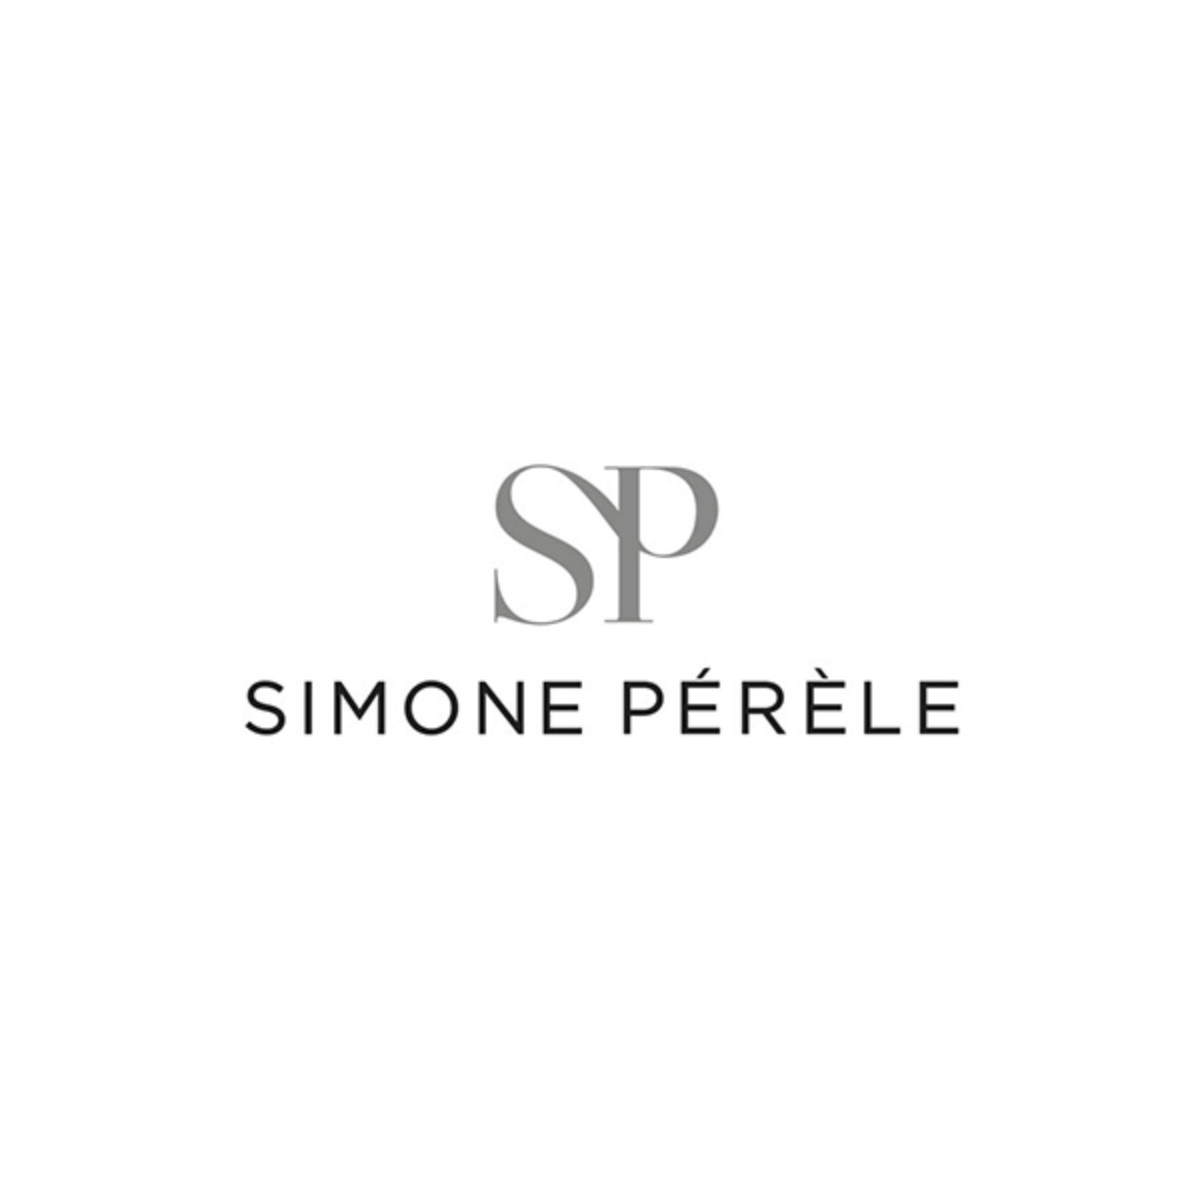 Simone Pérèle's Saga Continues